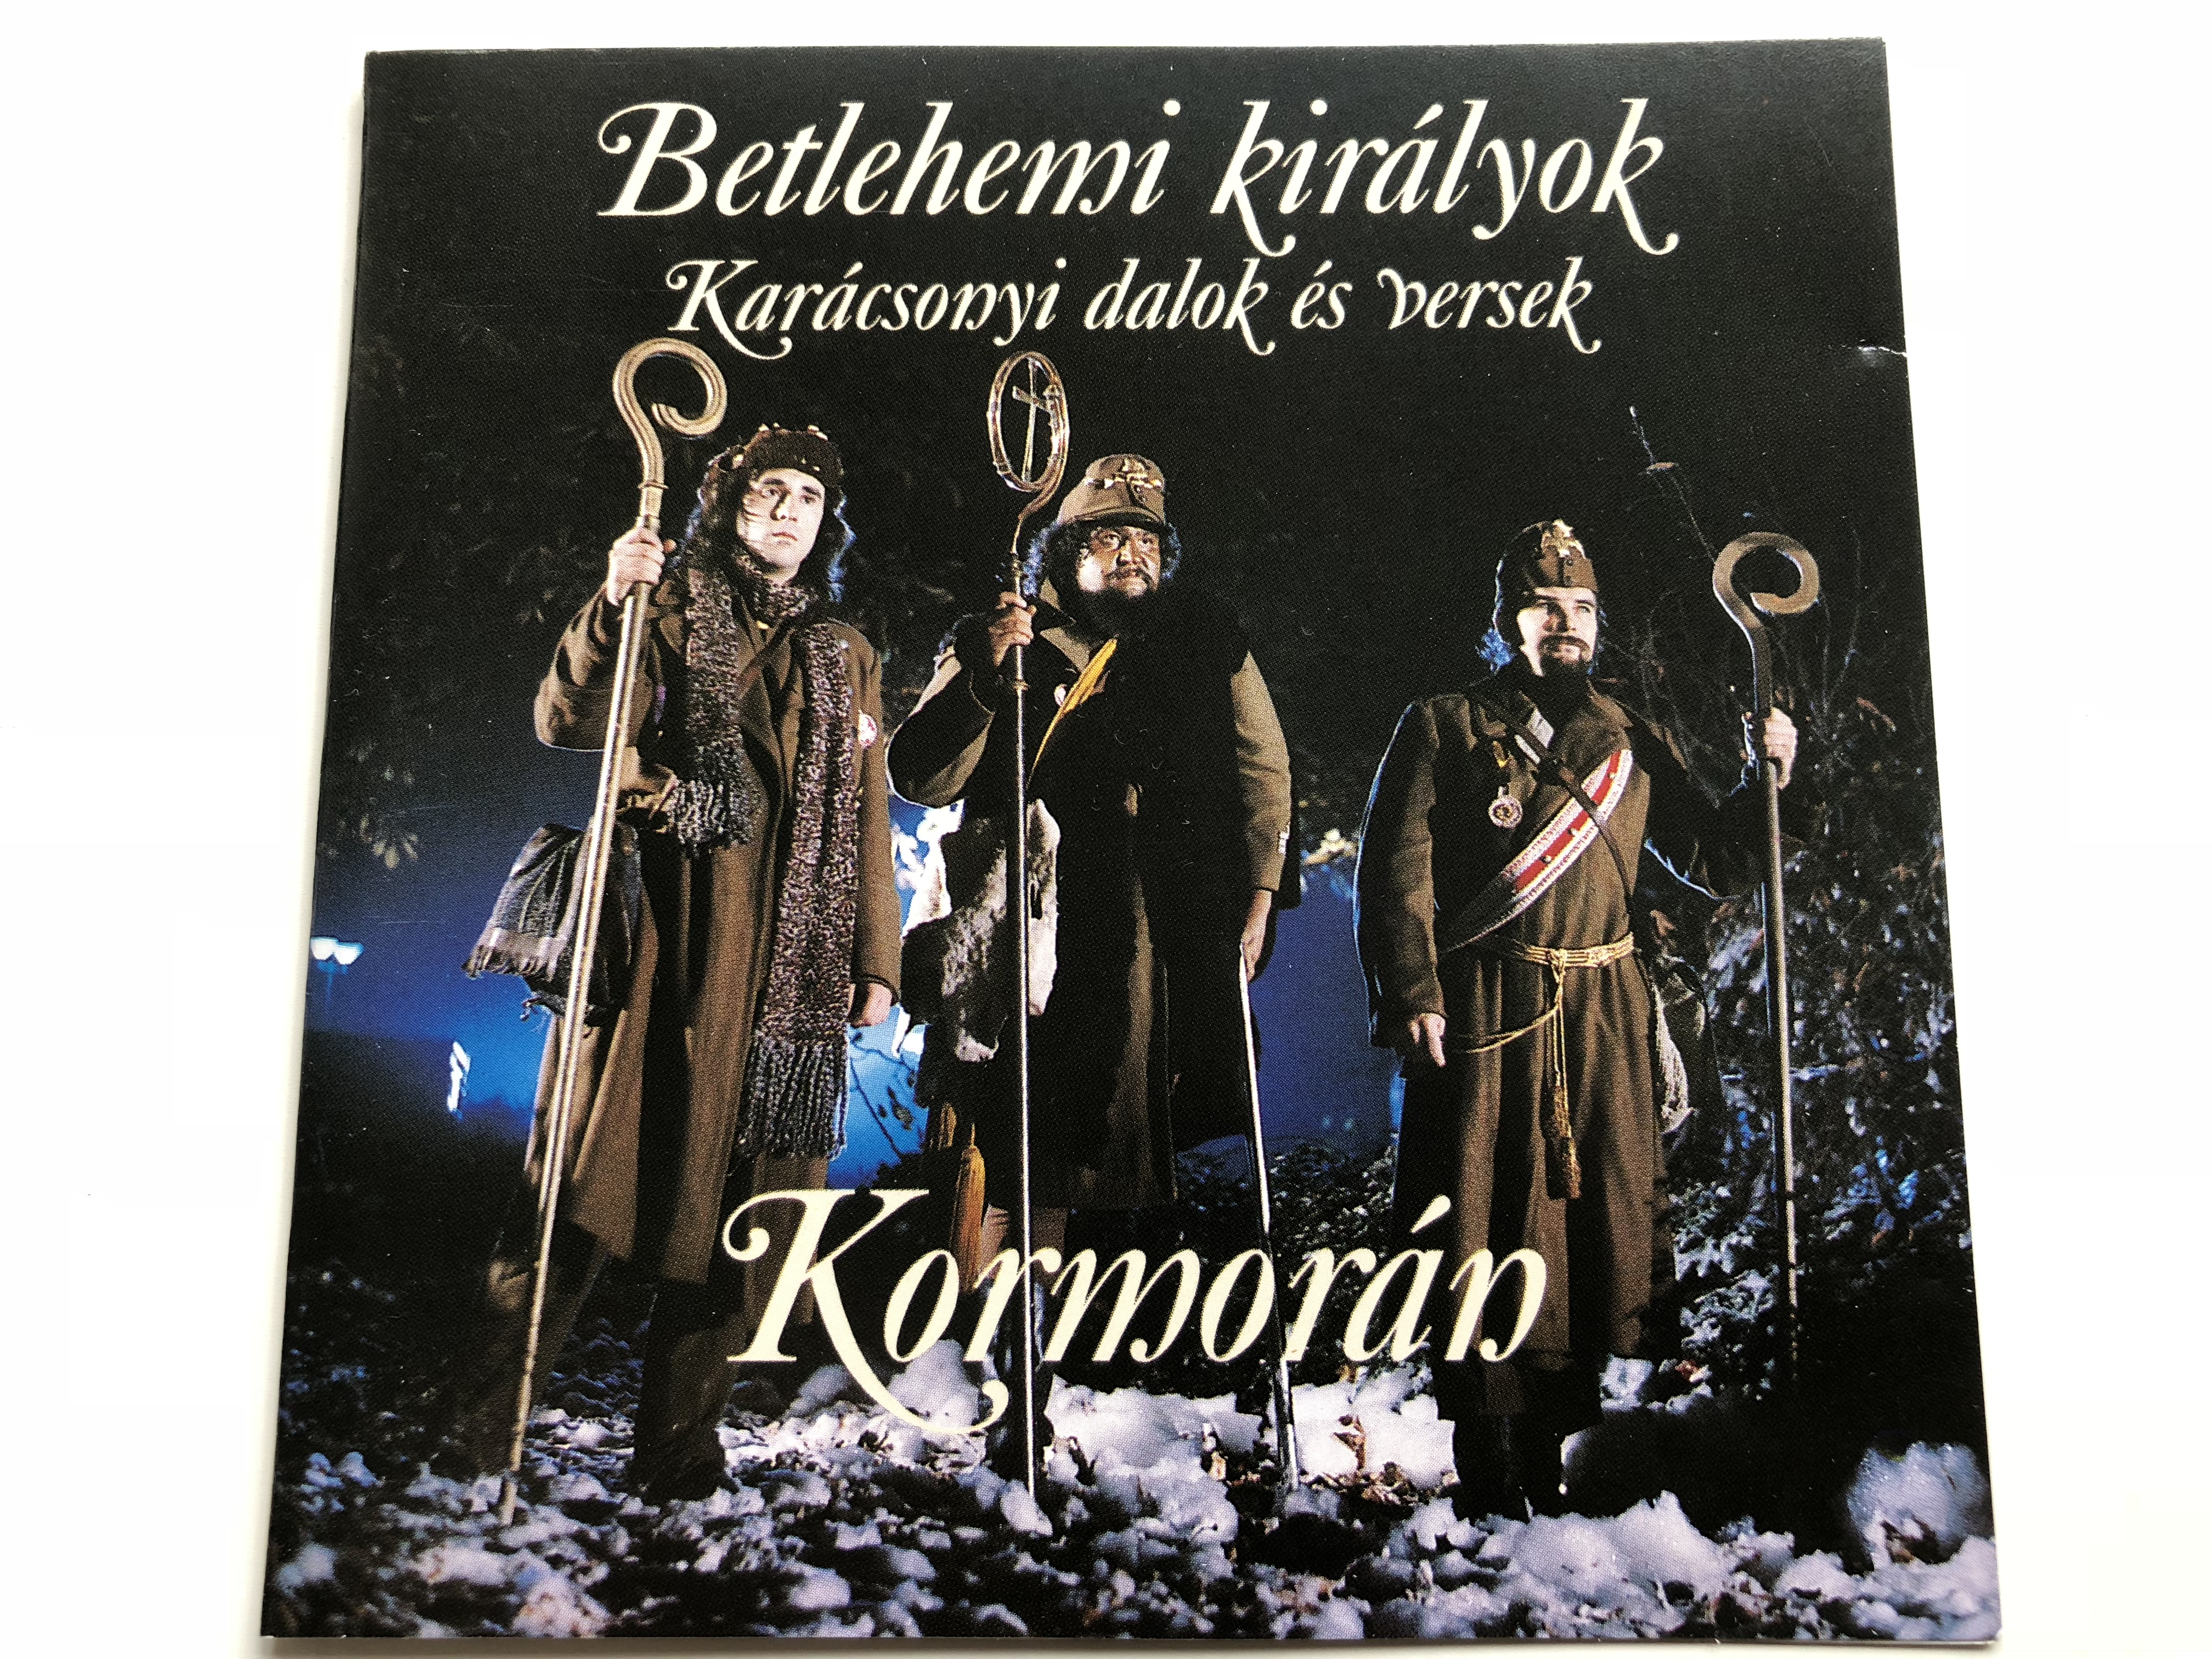 betlehemi-kir-lyok-kar-csonyi-dalok-s-versek-kormor-n-gonh-audio-cd-1997-hcd-14021-1-.jpg